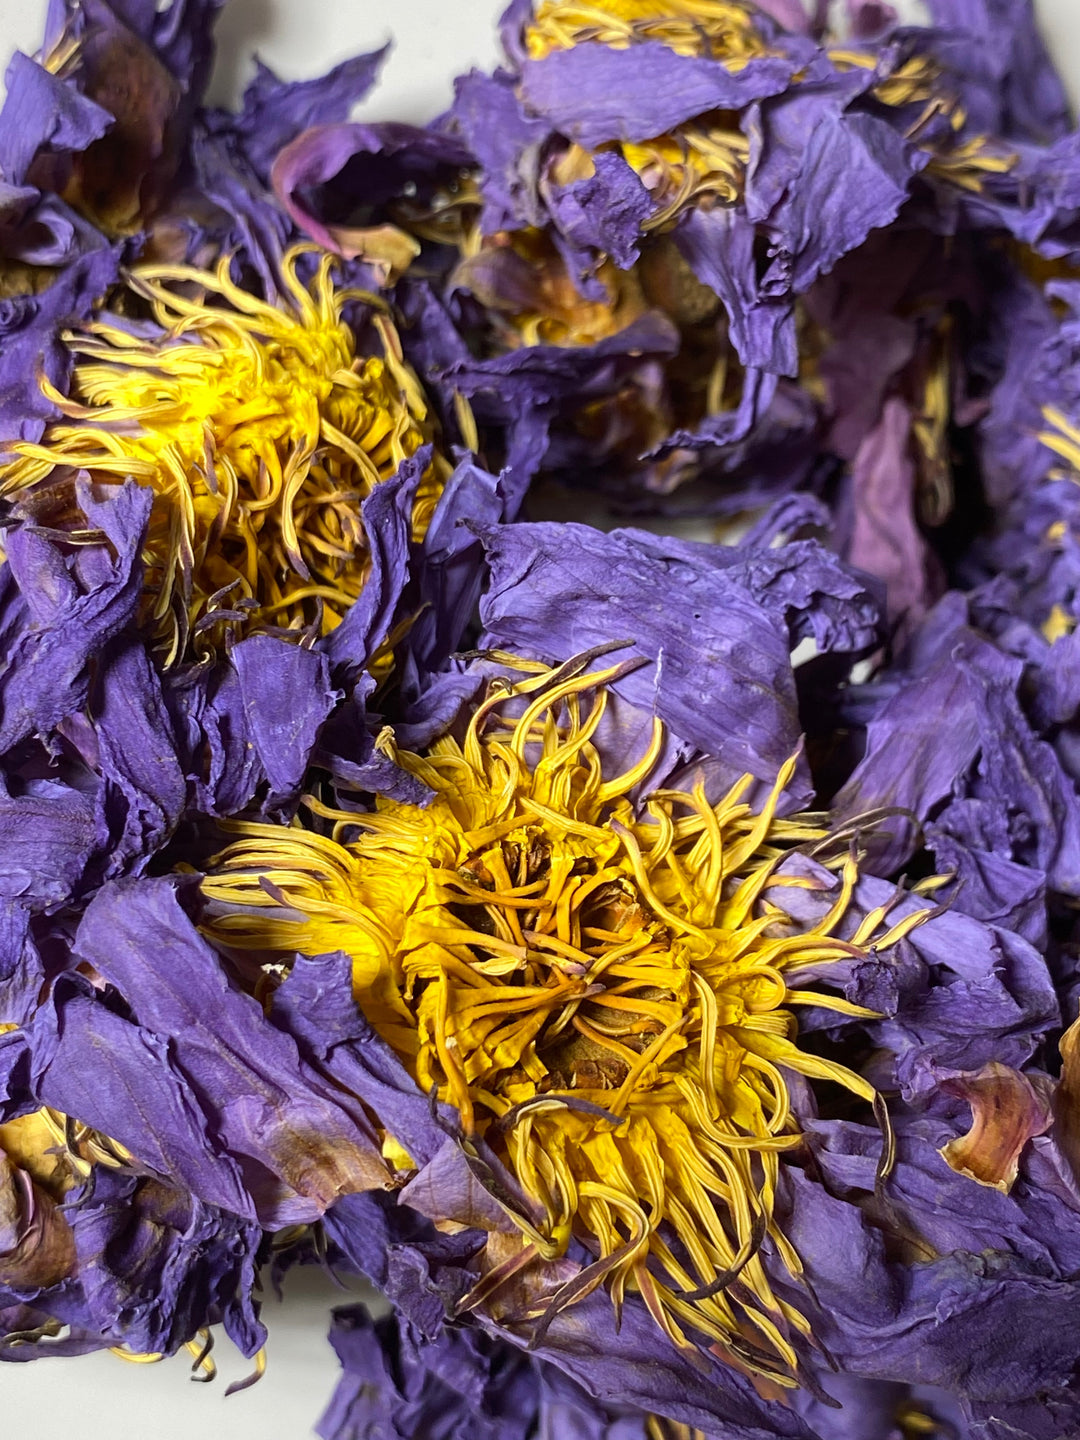 Blue Lotus Flower Organic - Ayoni Wellness